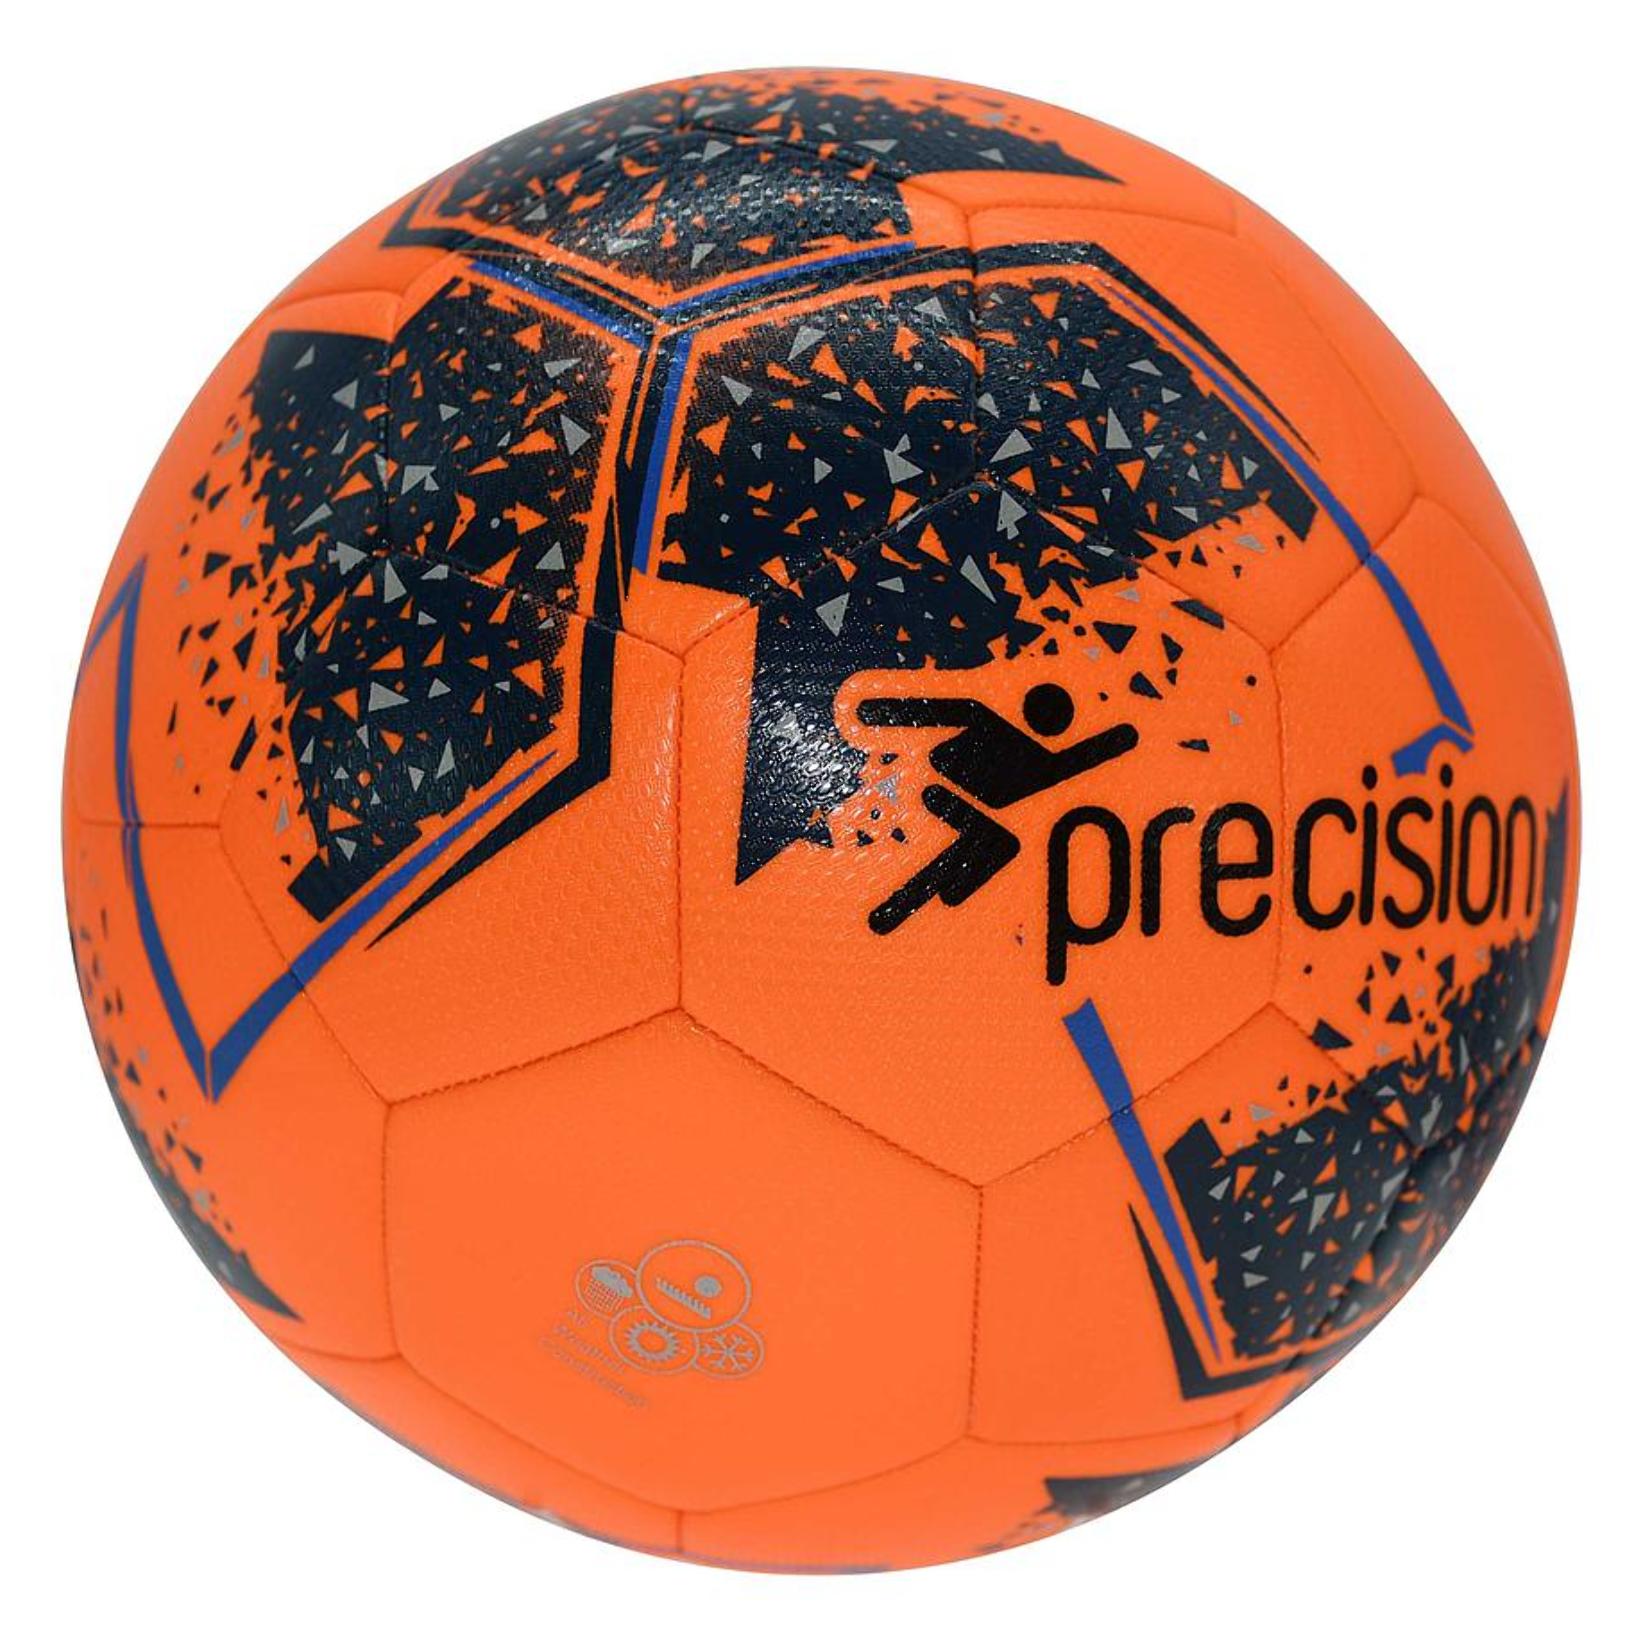 Precision Fusion IMS Training Ball Flou Orange-Blue-Royal-Grey